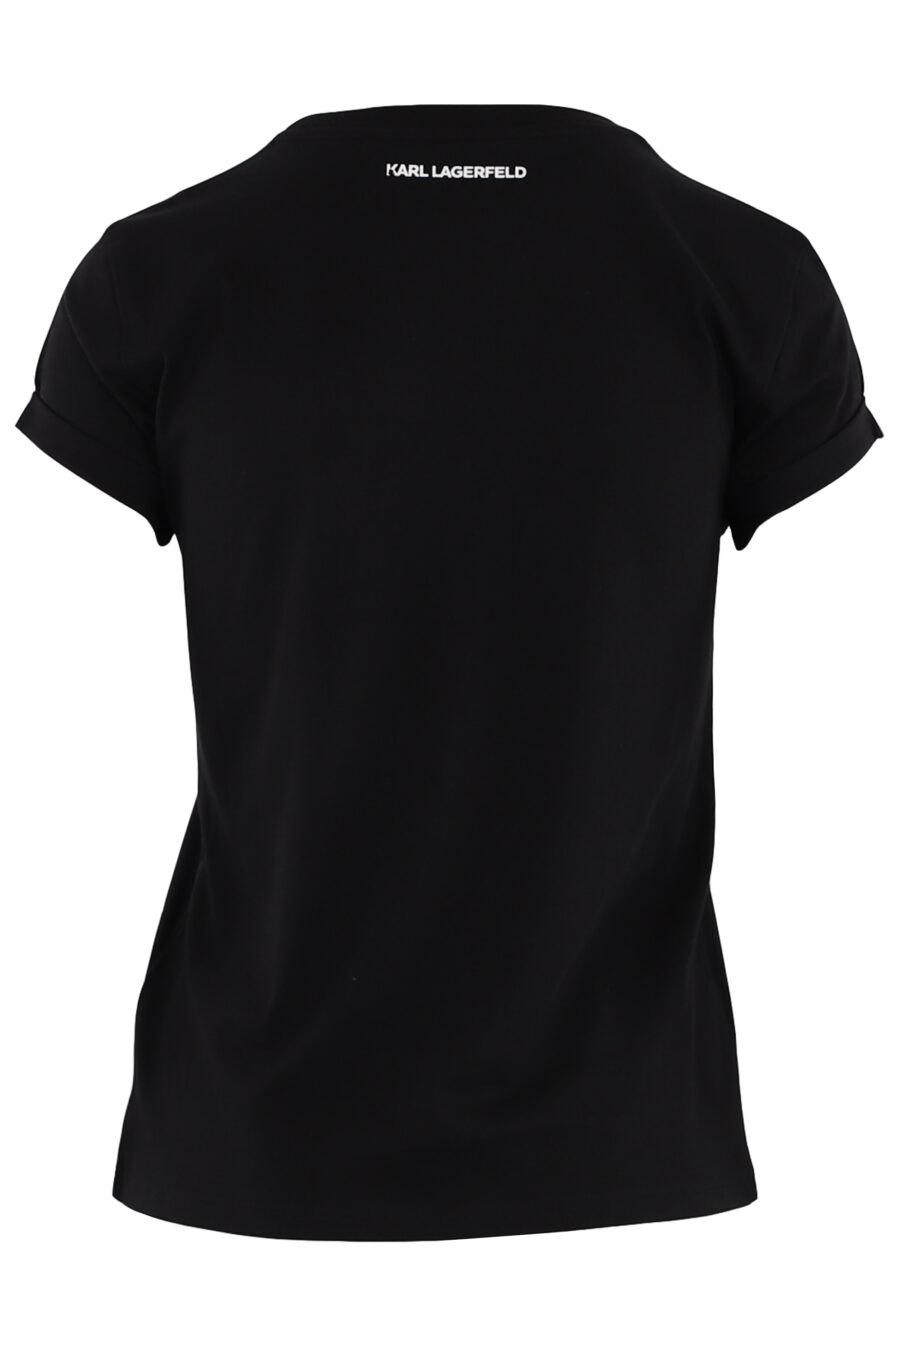 Camiseta negra con logo "karl" bolsillo - IMG 0726